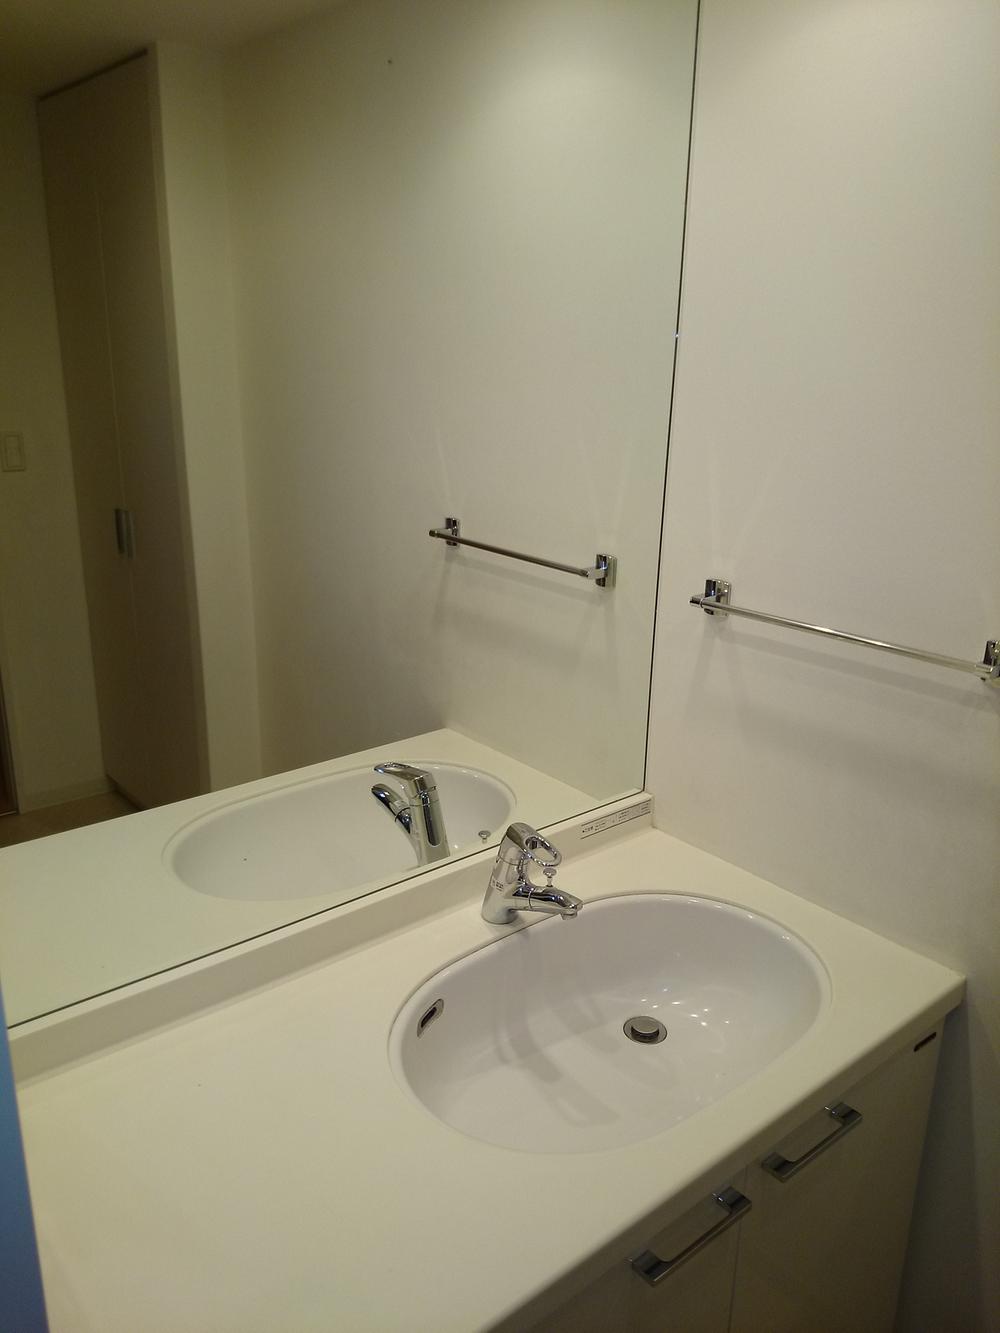 Wash basin, toilet. Large vanity mirrors